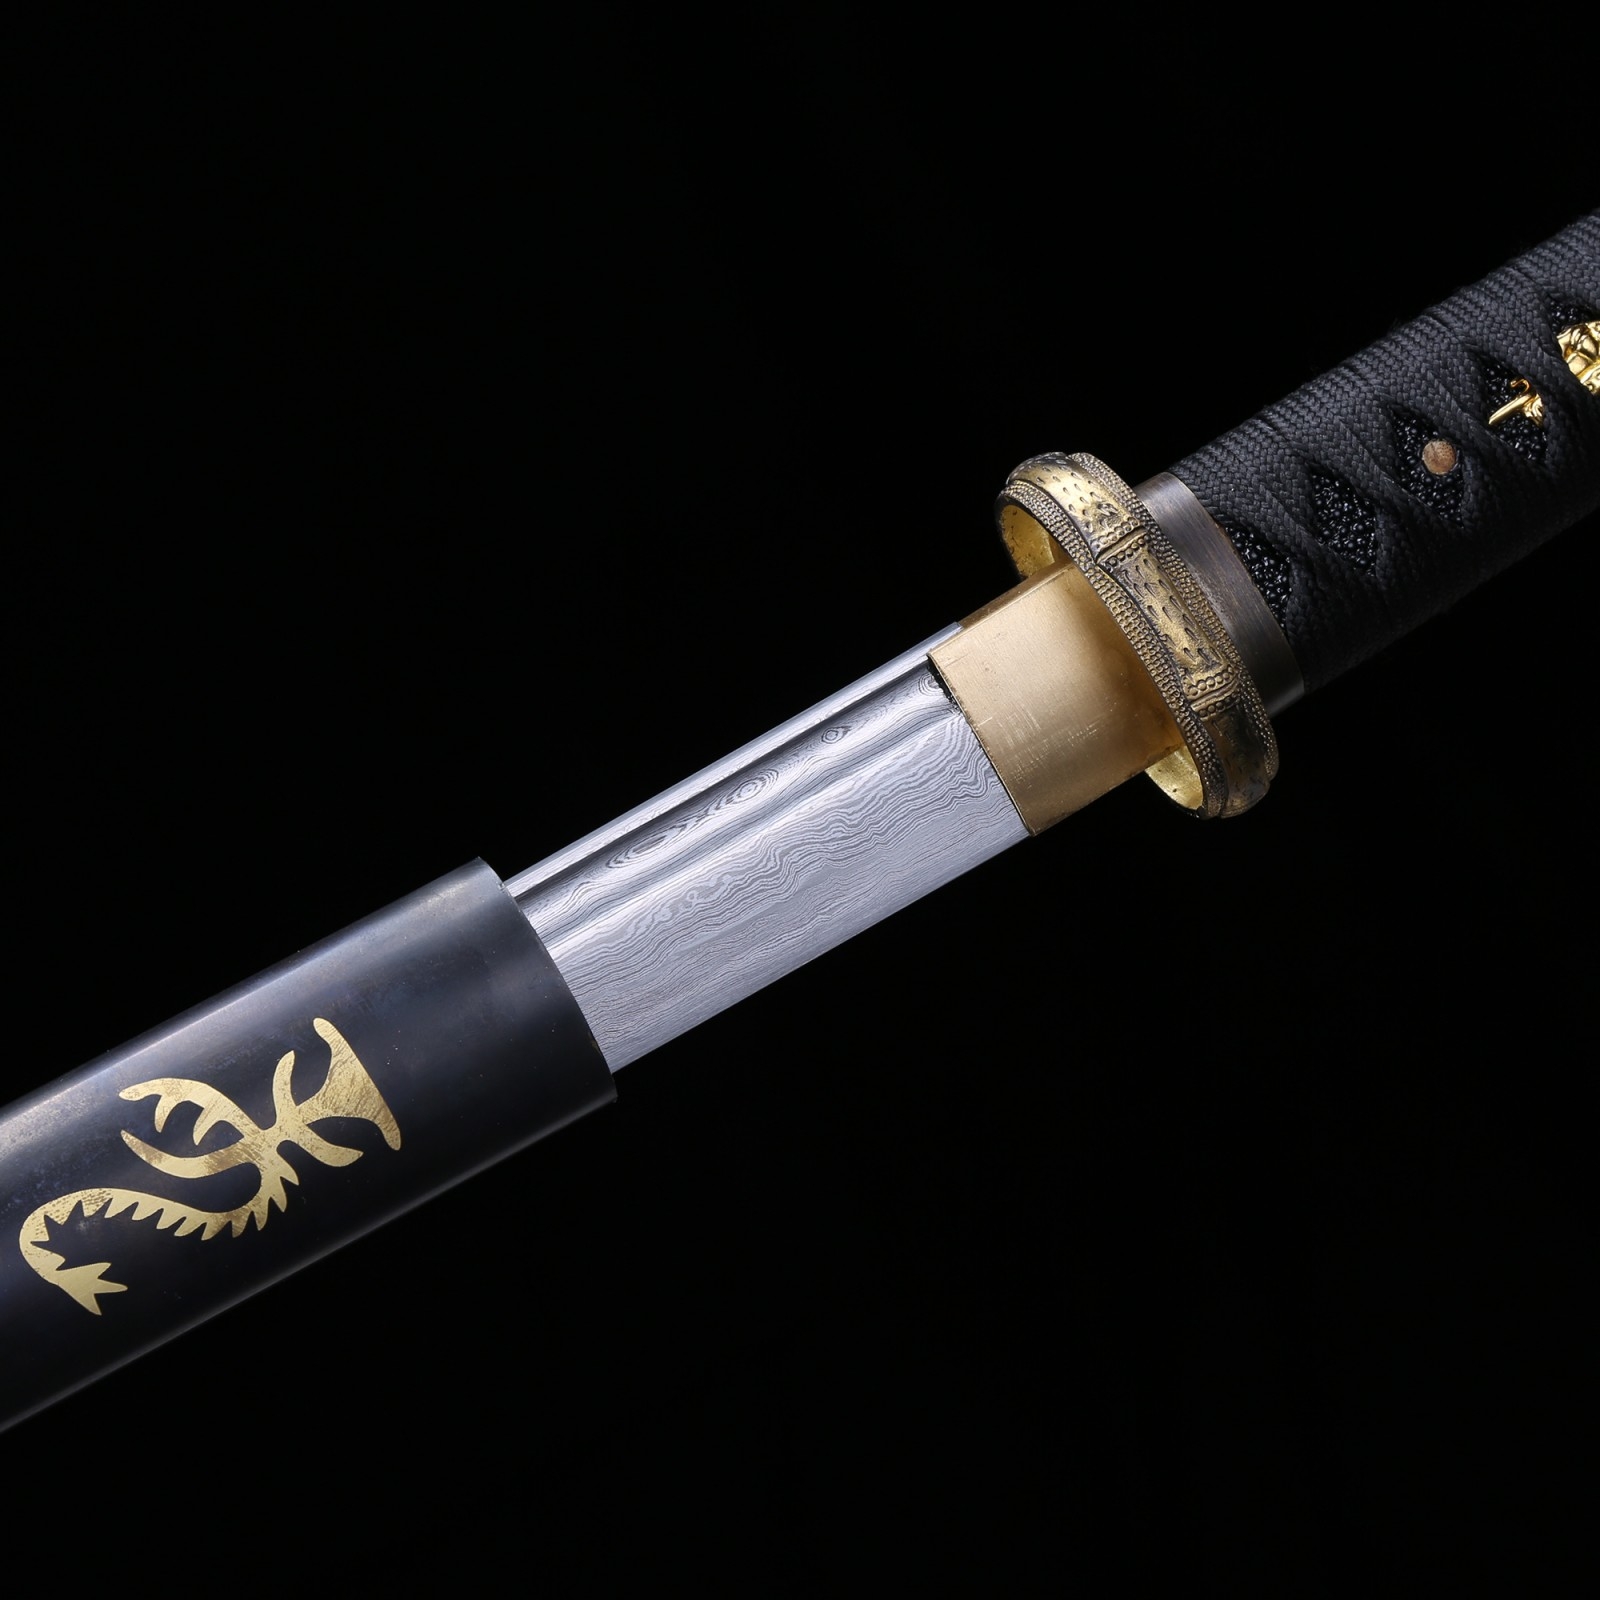  FengYu SWORD 9260 Primavera Acero Afilado Hecho A Mano Espada  Katana Espada Real Japonesa Samurai Espada Espada Espada Completa Espiga :  Deportes y Actividades al Aire Libre